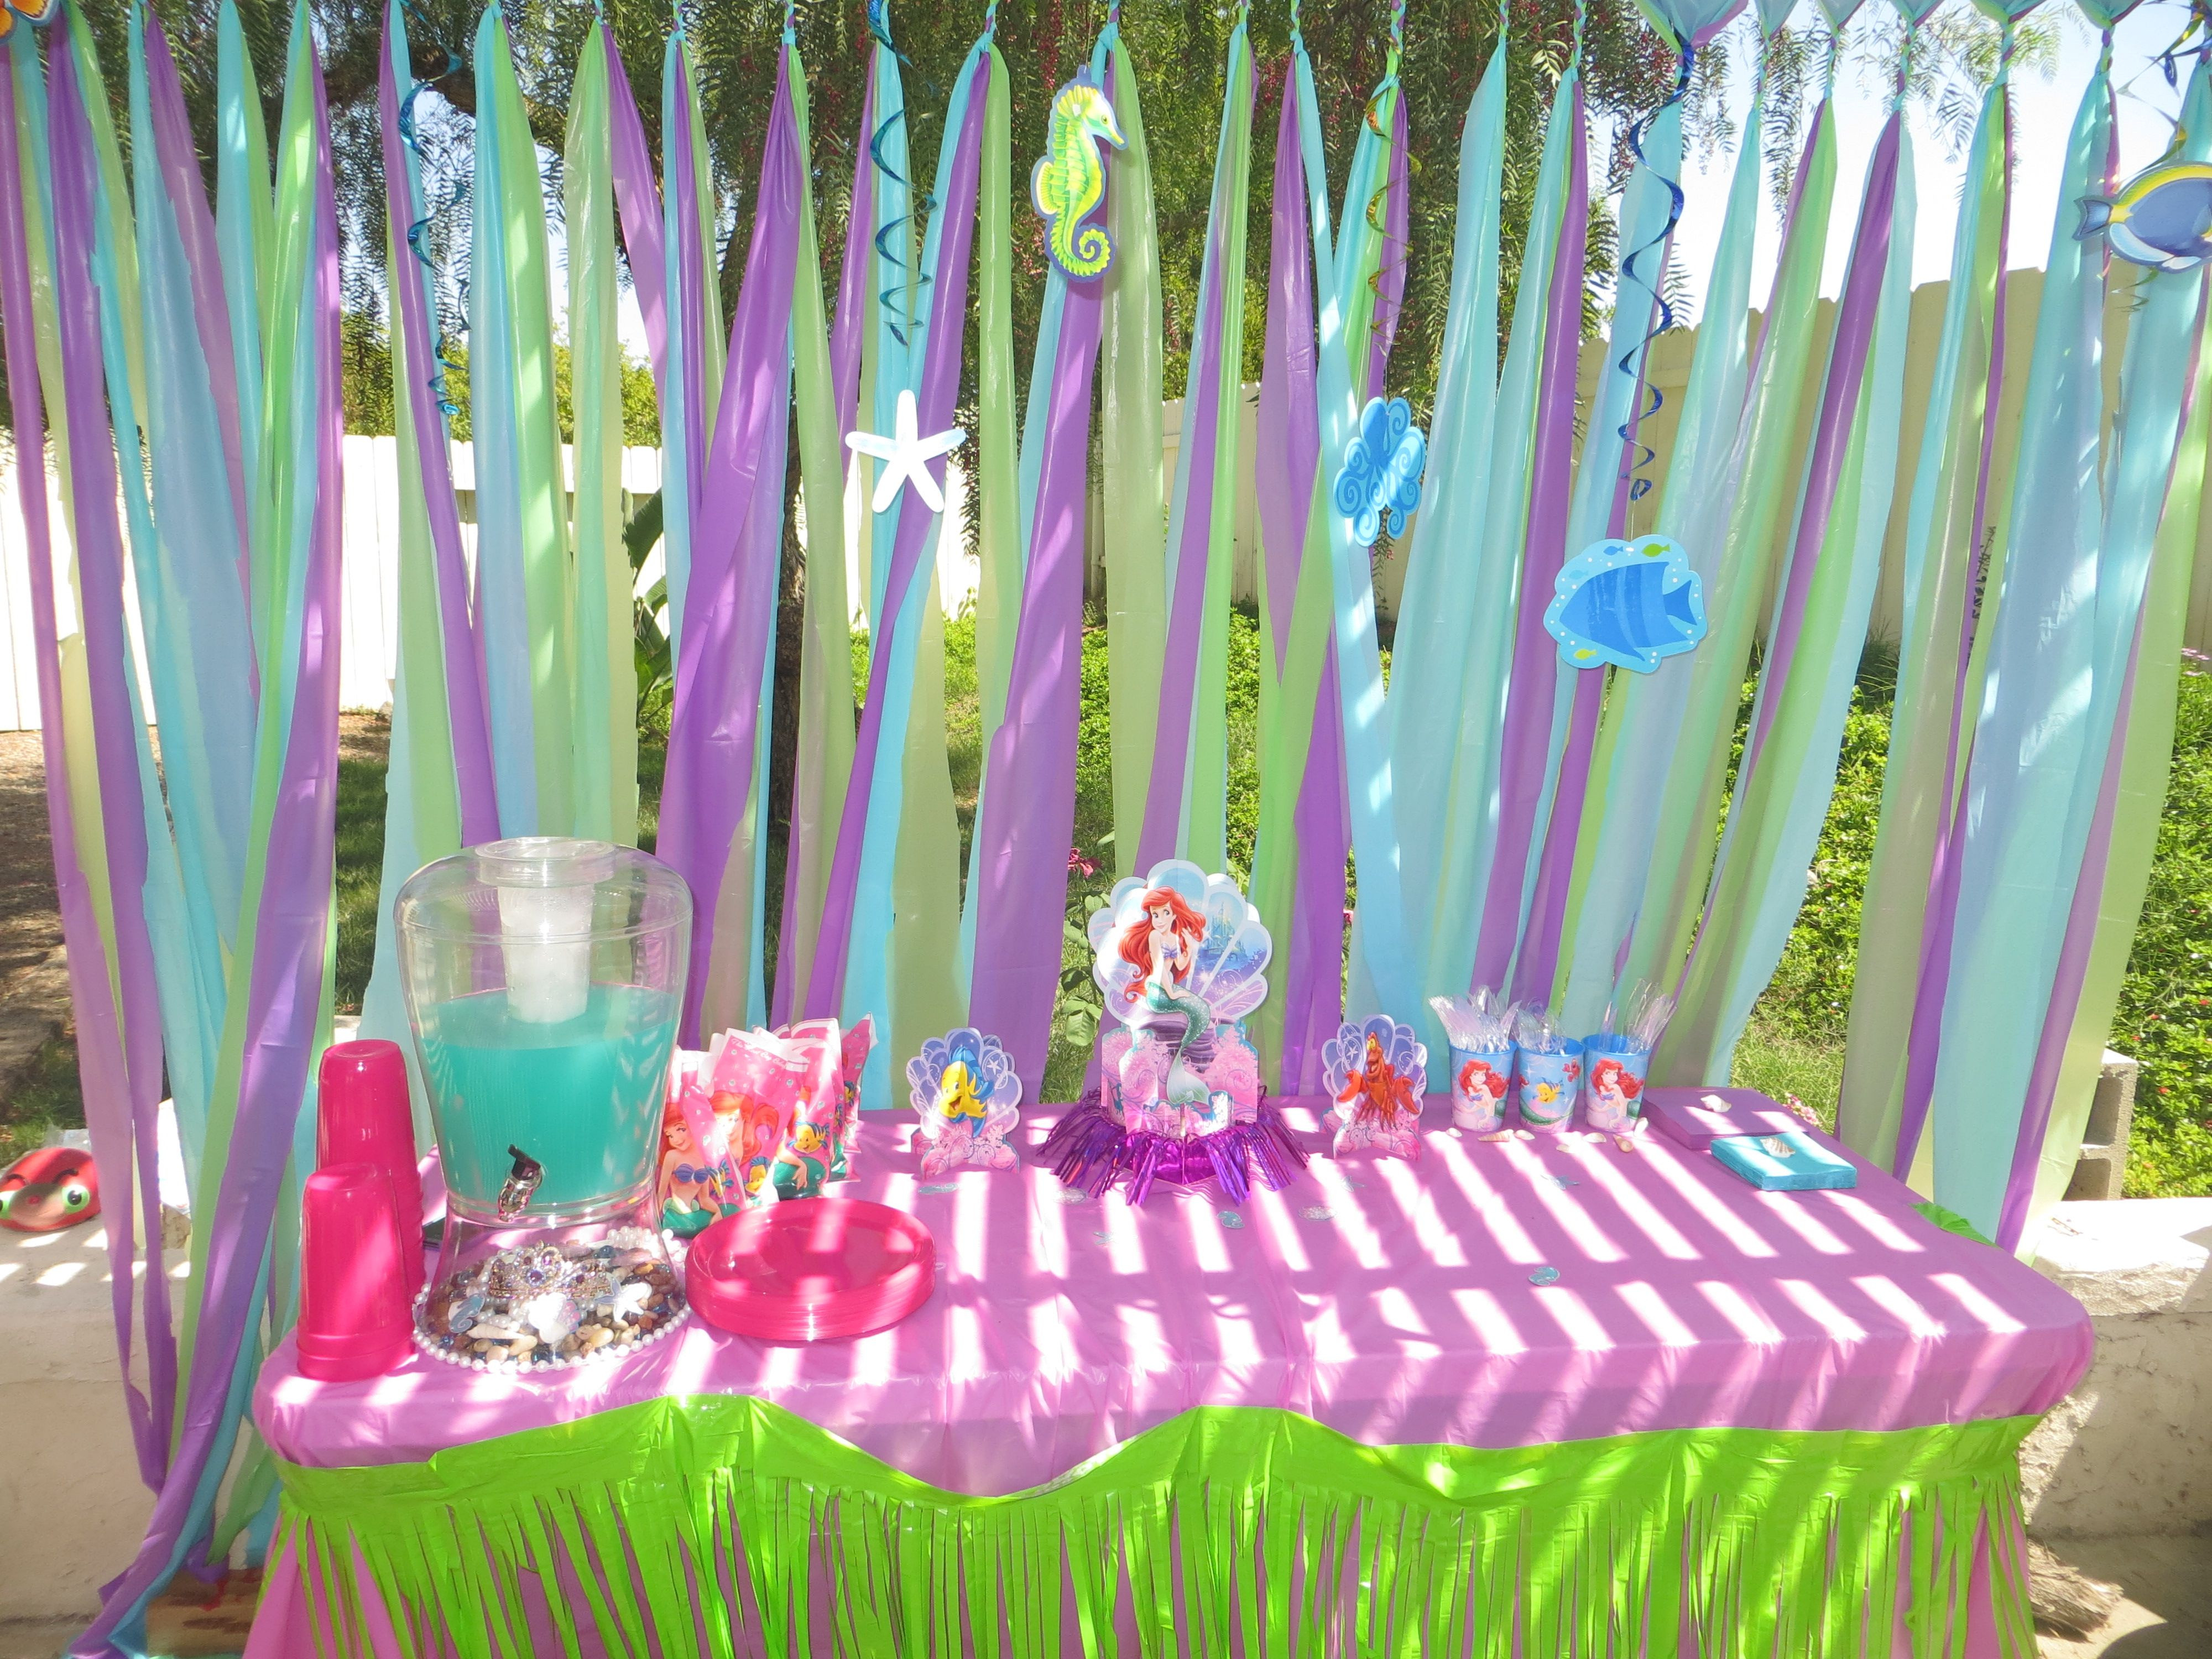 Little Mermaid Party Decoration Ideas
 Arianna s 3rd birthday party decorations The little